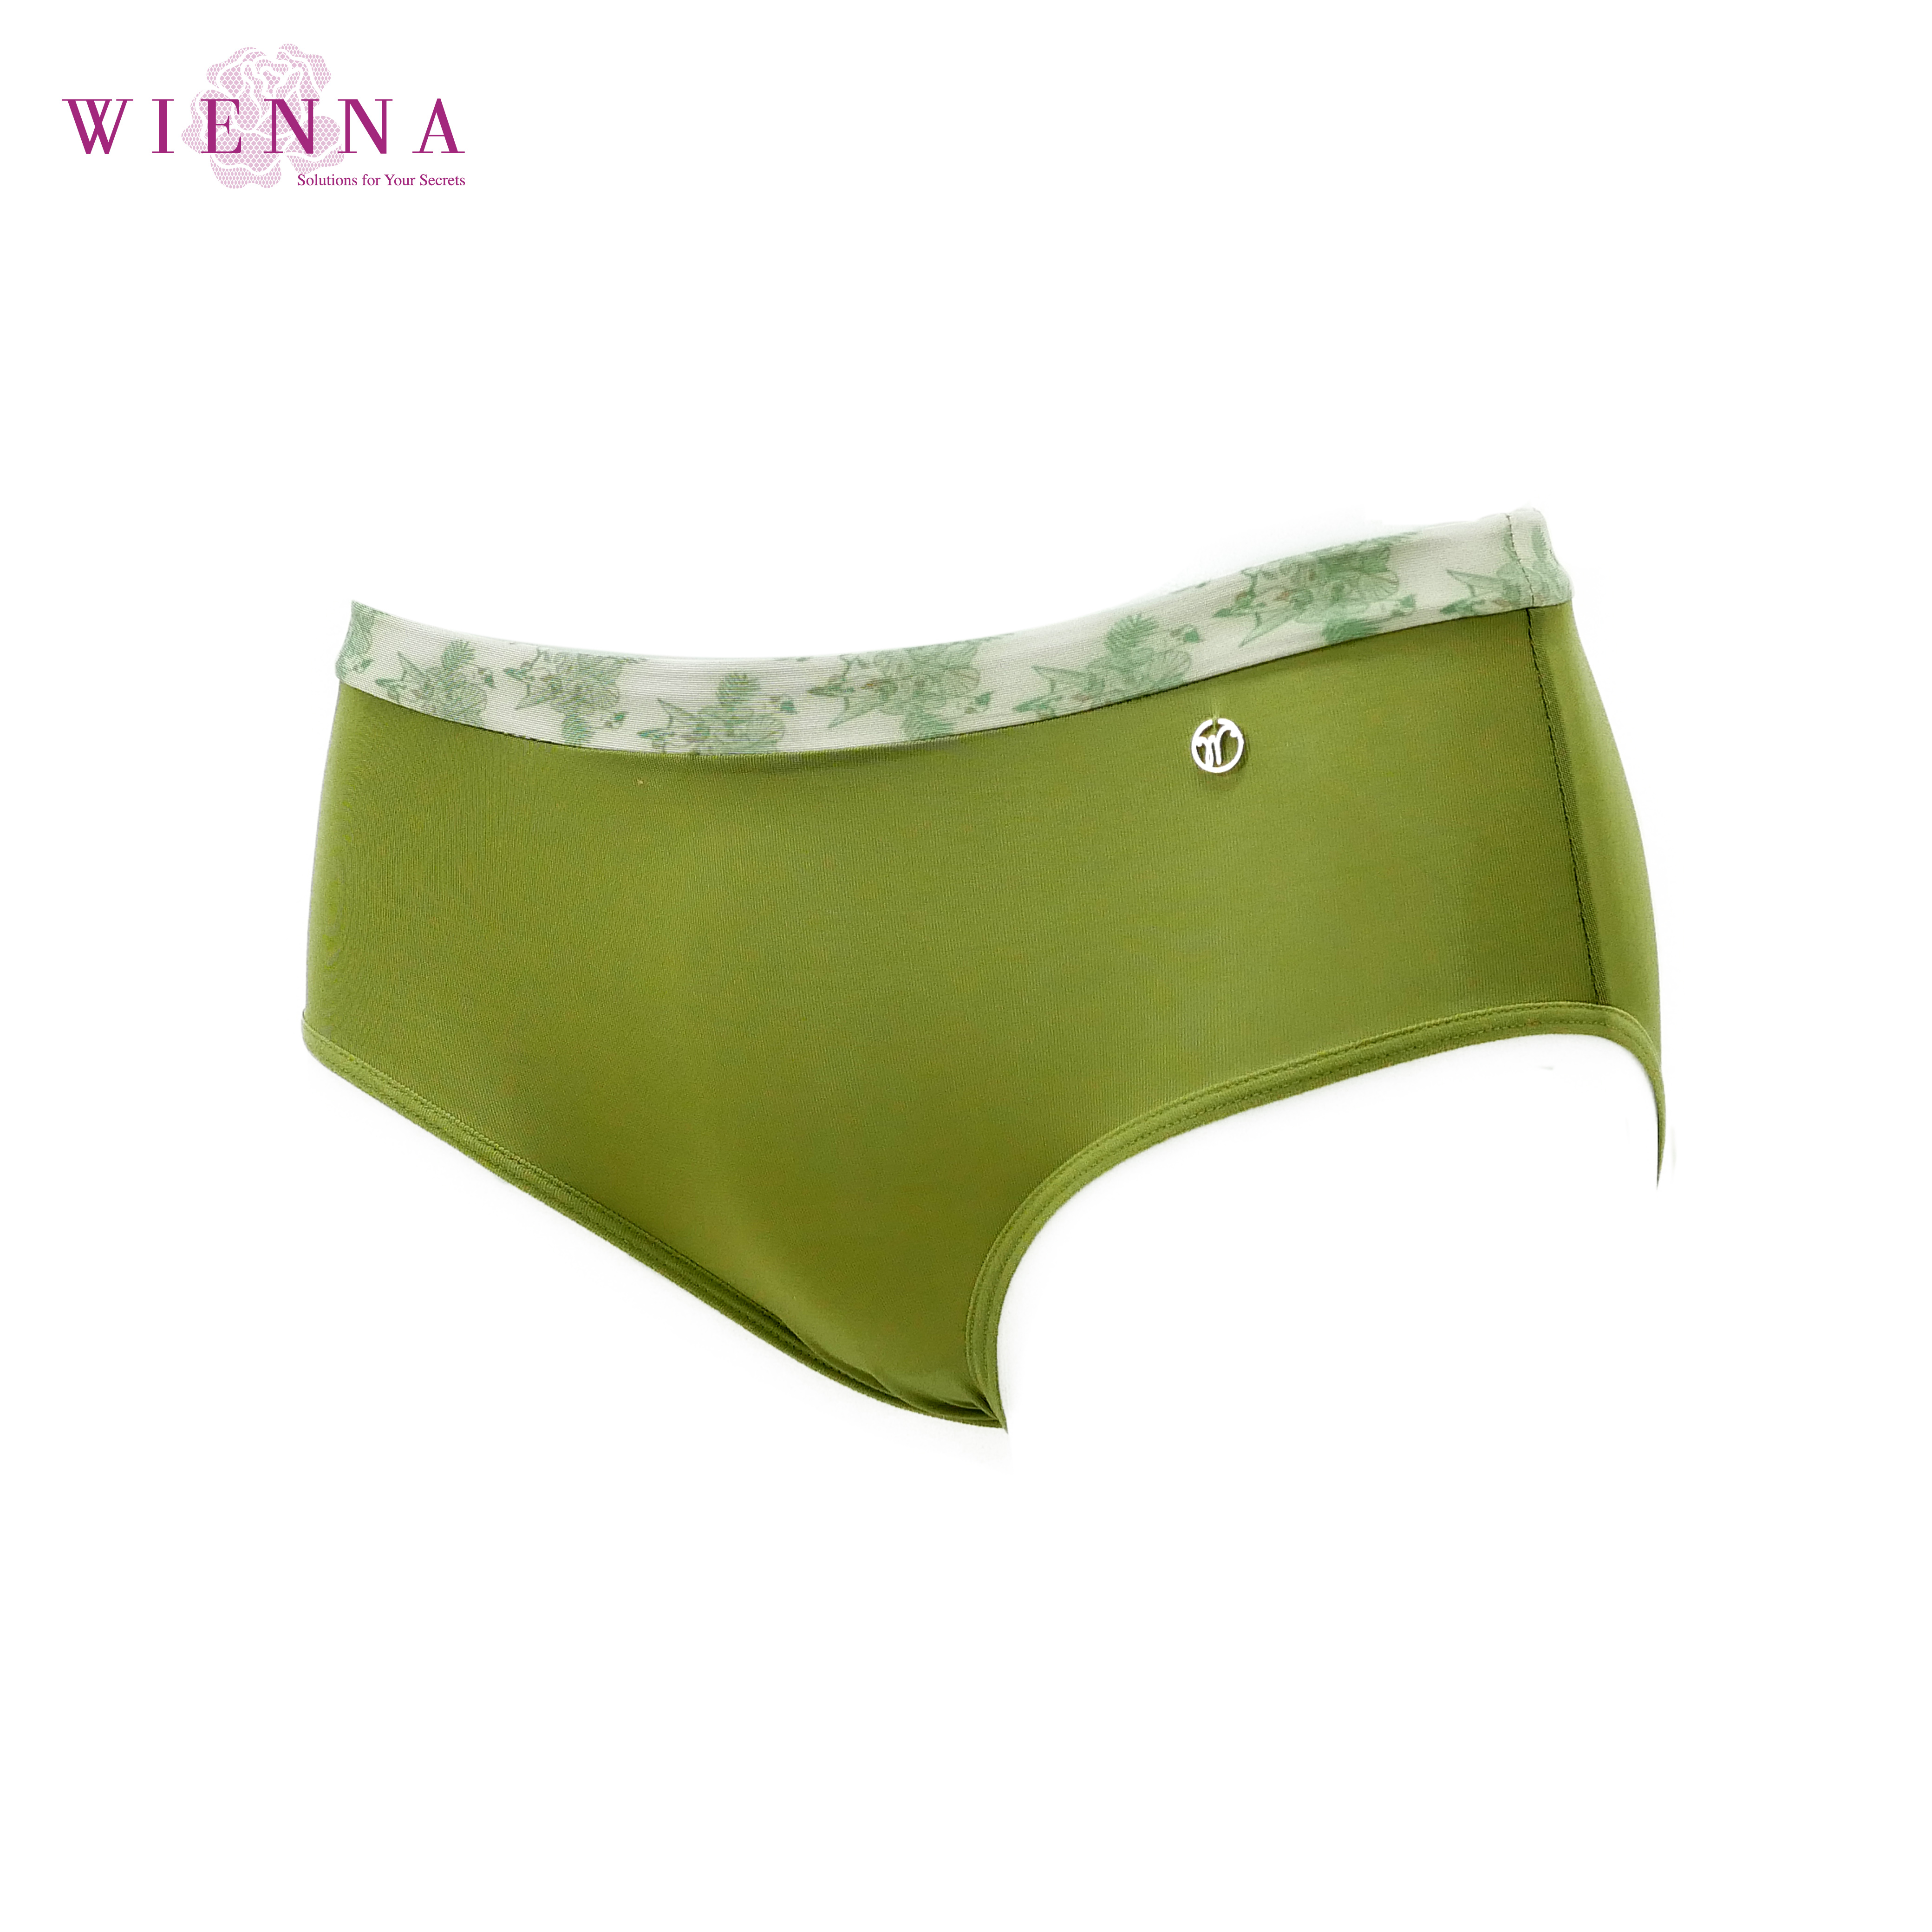 Wienna DU13201 ชุดชั้นใน เวียนนา กางเกงใน Tropical Panties ครึ่งตัว อุ้มก้น ไซซ์ M,L,E(XL) สีน้ำเงิน , เขียว